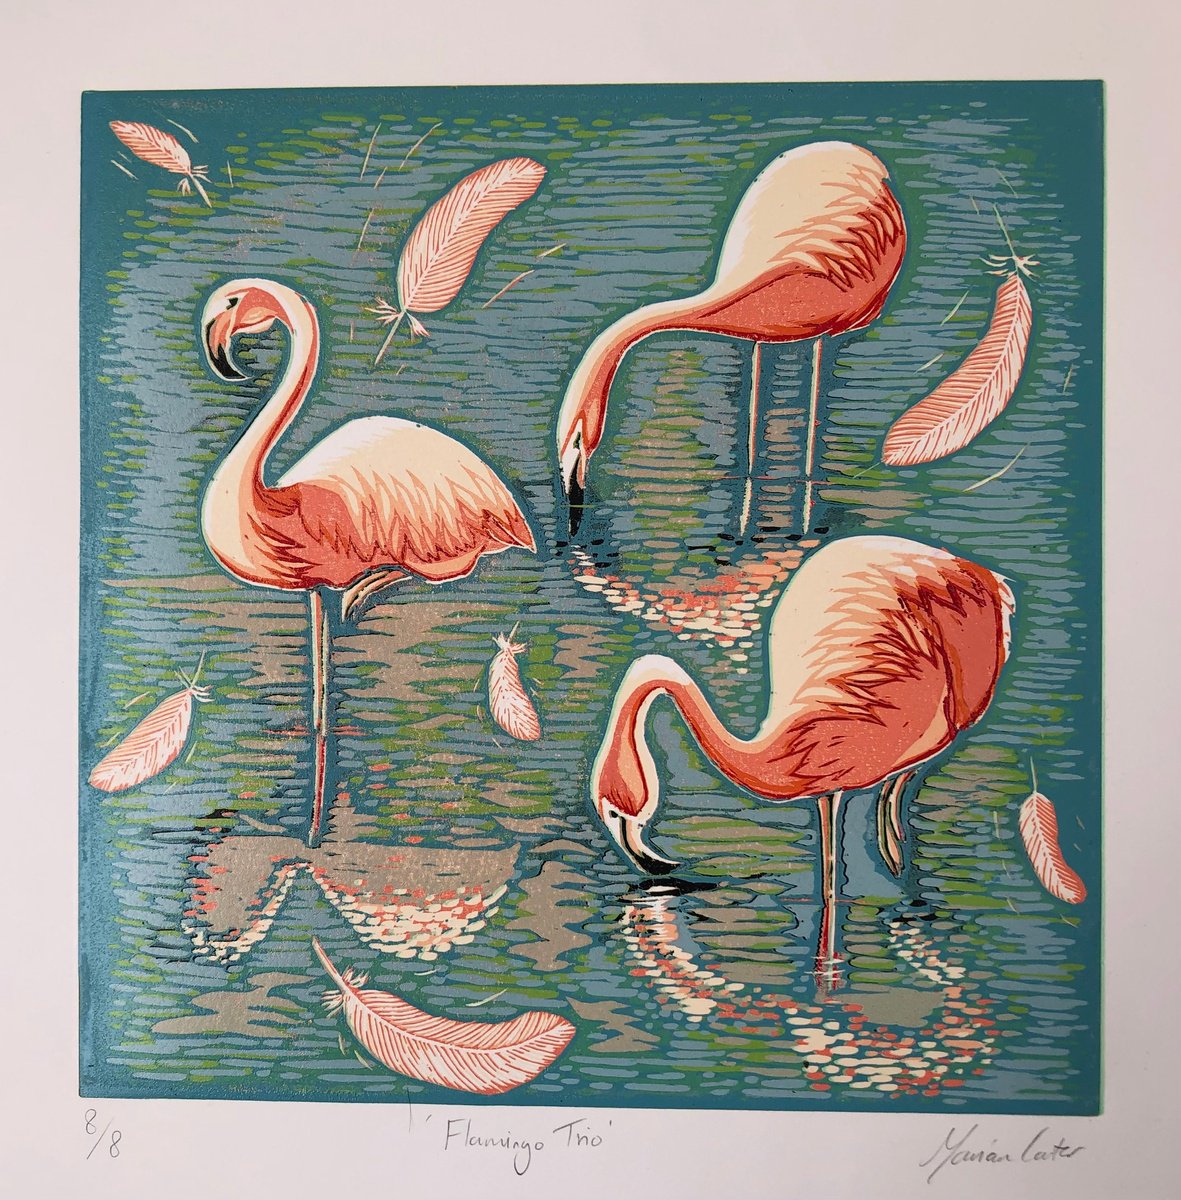 Flamingo Trio by Marian Carter